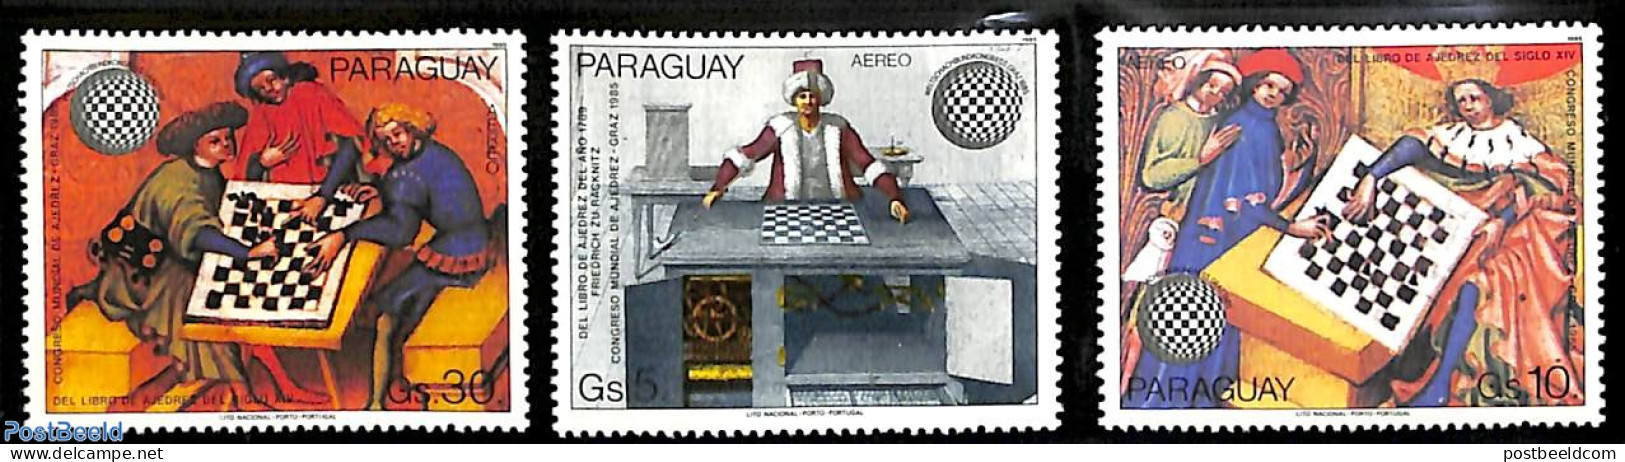 Paraguay 1985 Chess Congress 3v, Mint NH, Sport - Chess - Chess